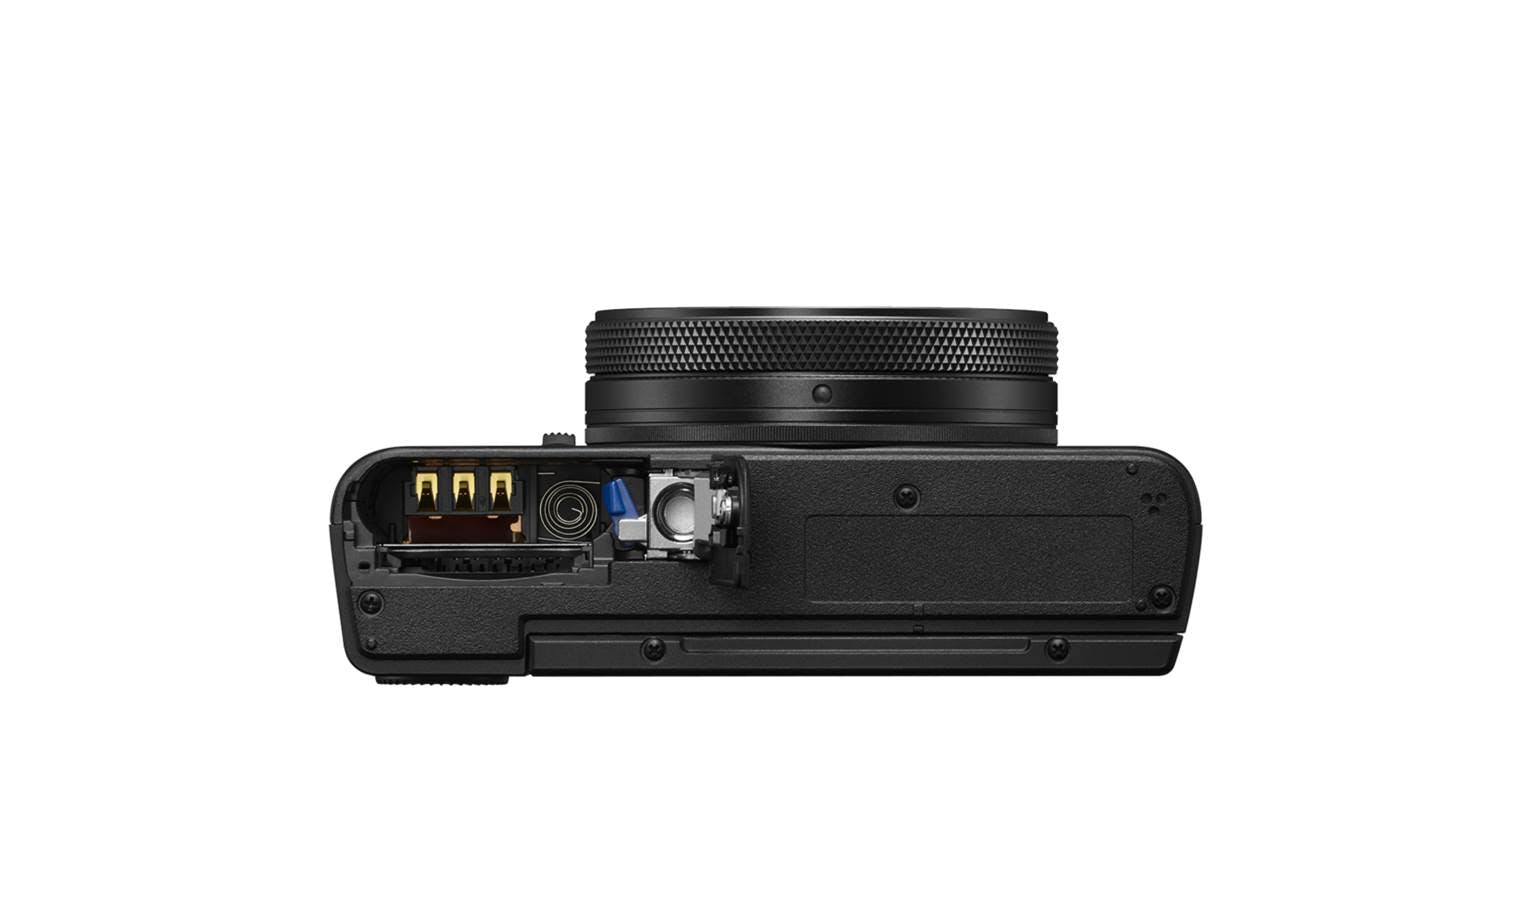 RX100 VII Compact Camera, Unrivalled AF, DSC-RX100M7G